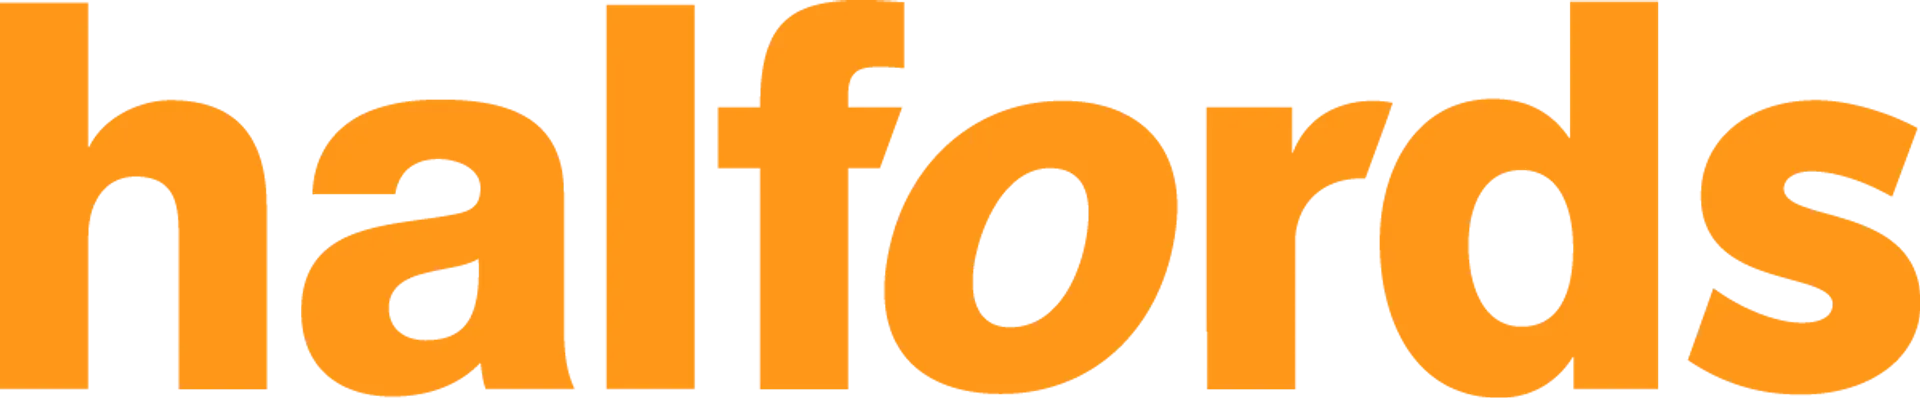 HALFORDS logo